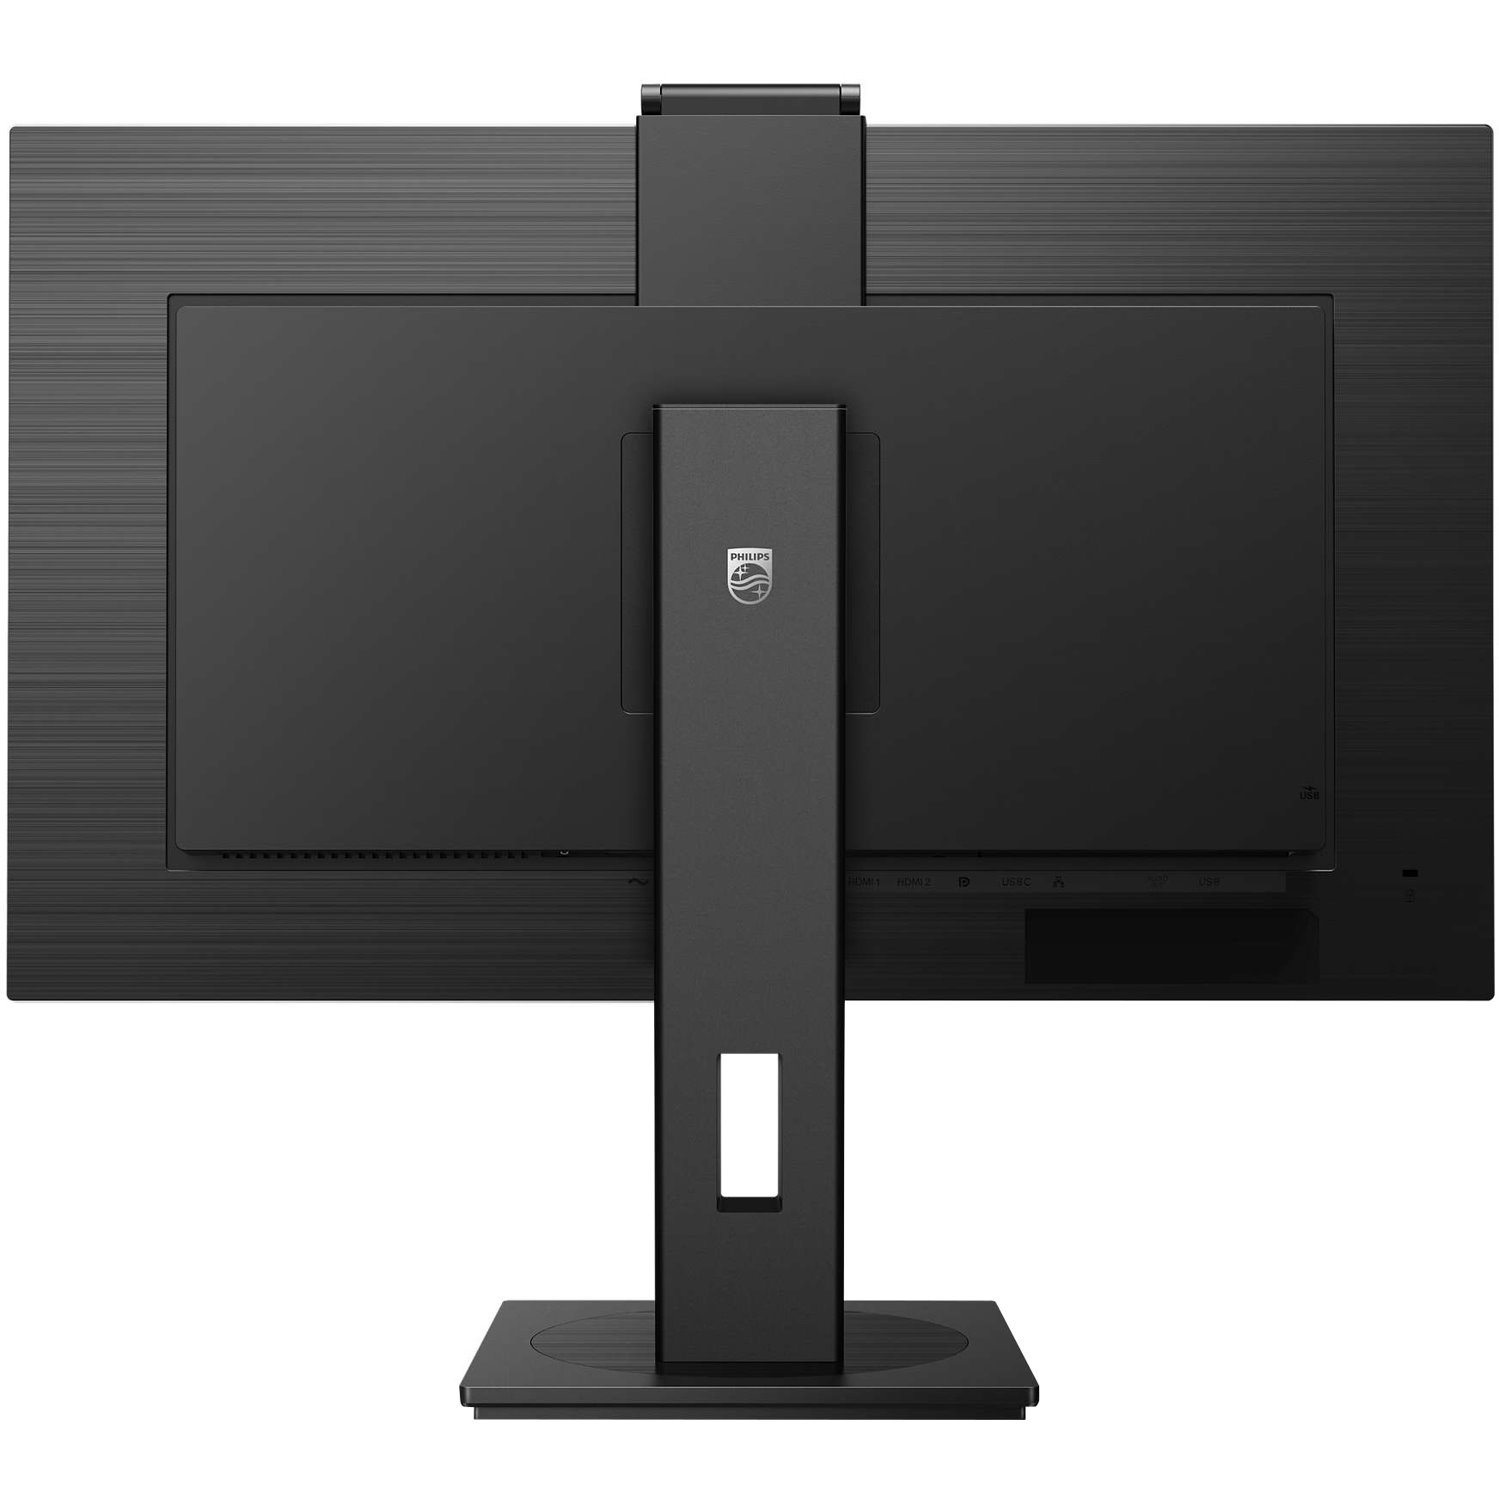 Philips 329P1H 80 cm (31.5") 4K UHD WLED LCD Monitor - 16:9 - Textured Black